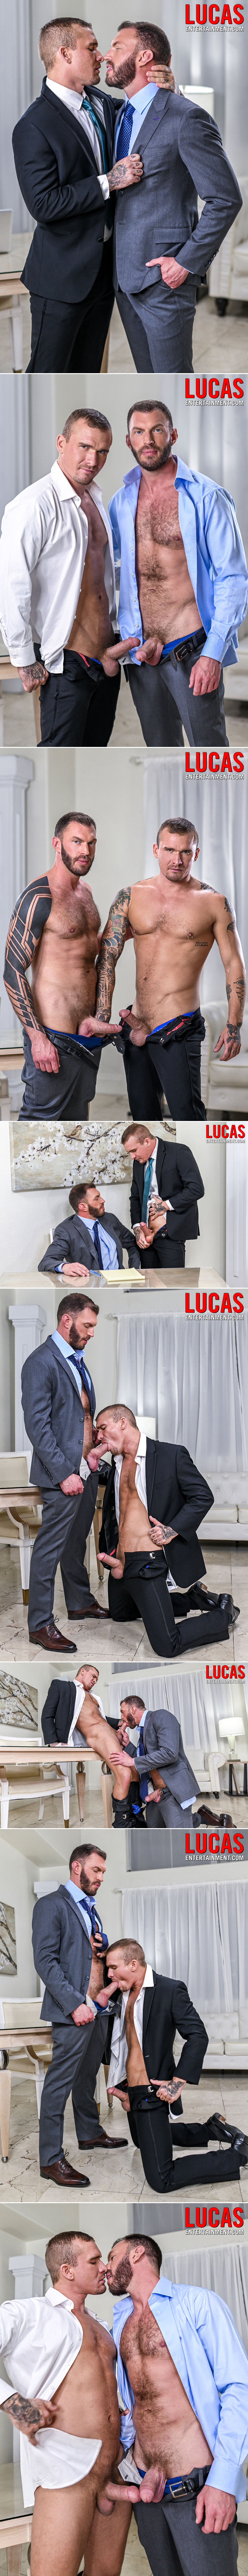 Gentlemen 31: Executive Submission, Scene 2 (Isaac X And Adam Gray Negotiate Via Flip-Fucking) at LucasEntertainment